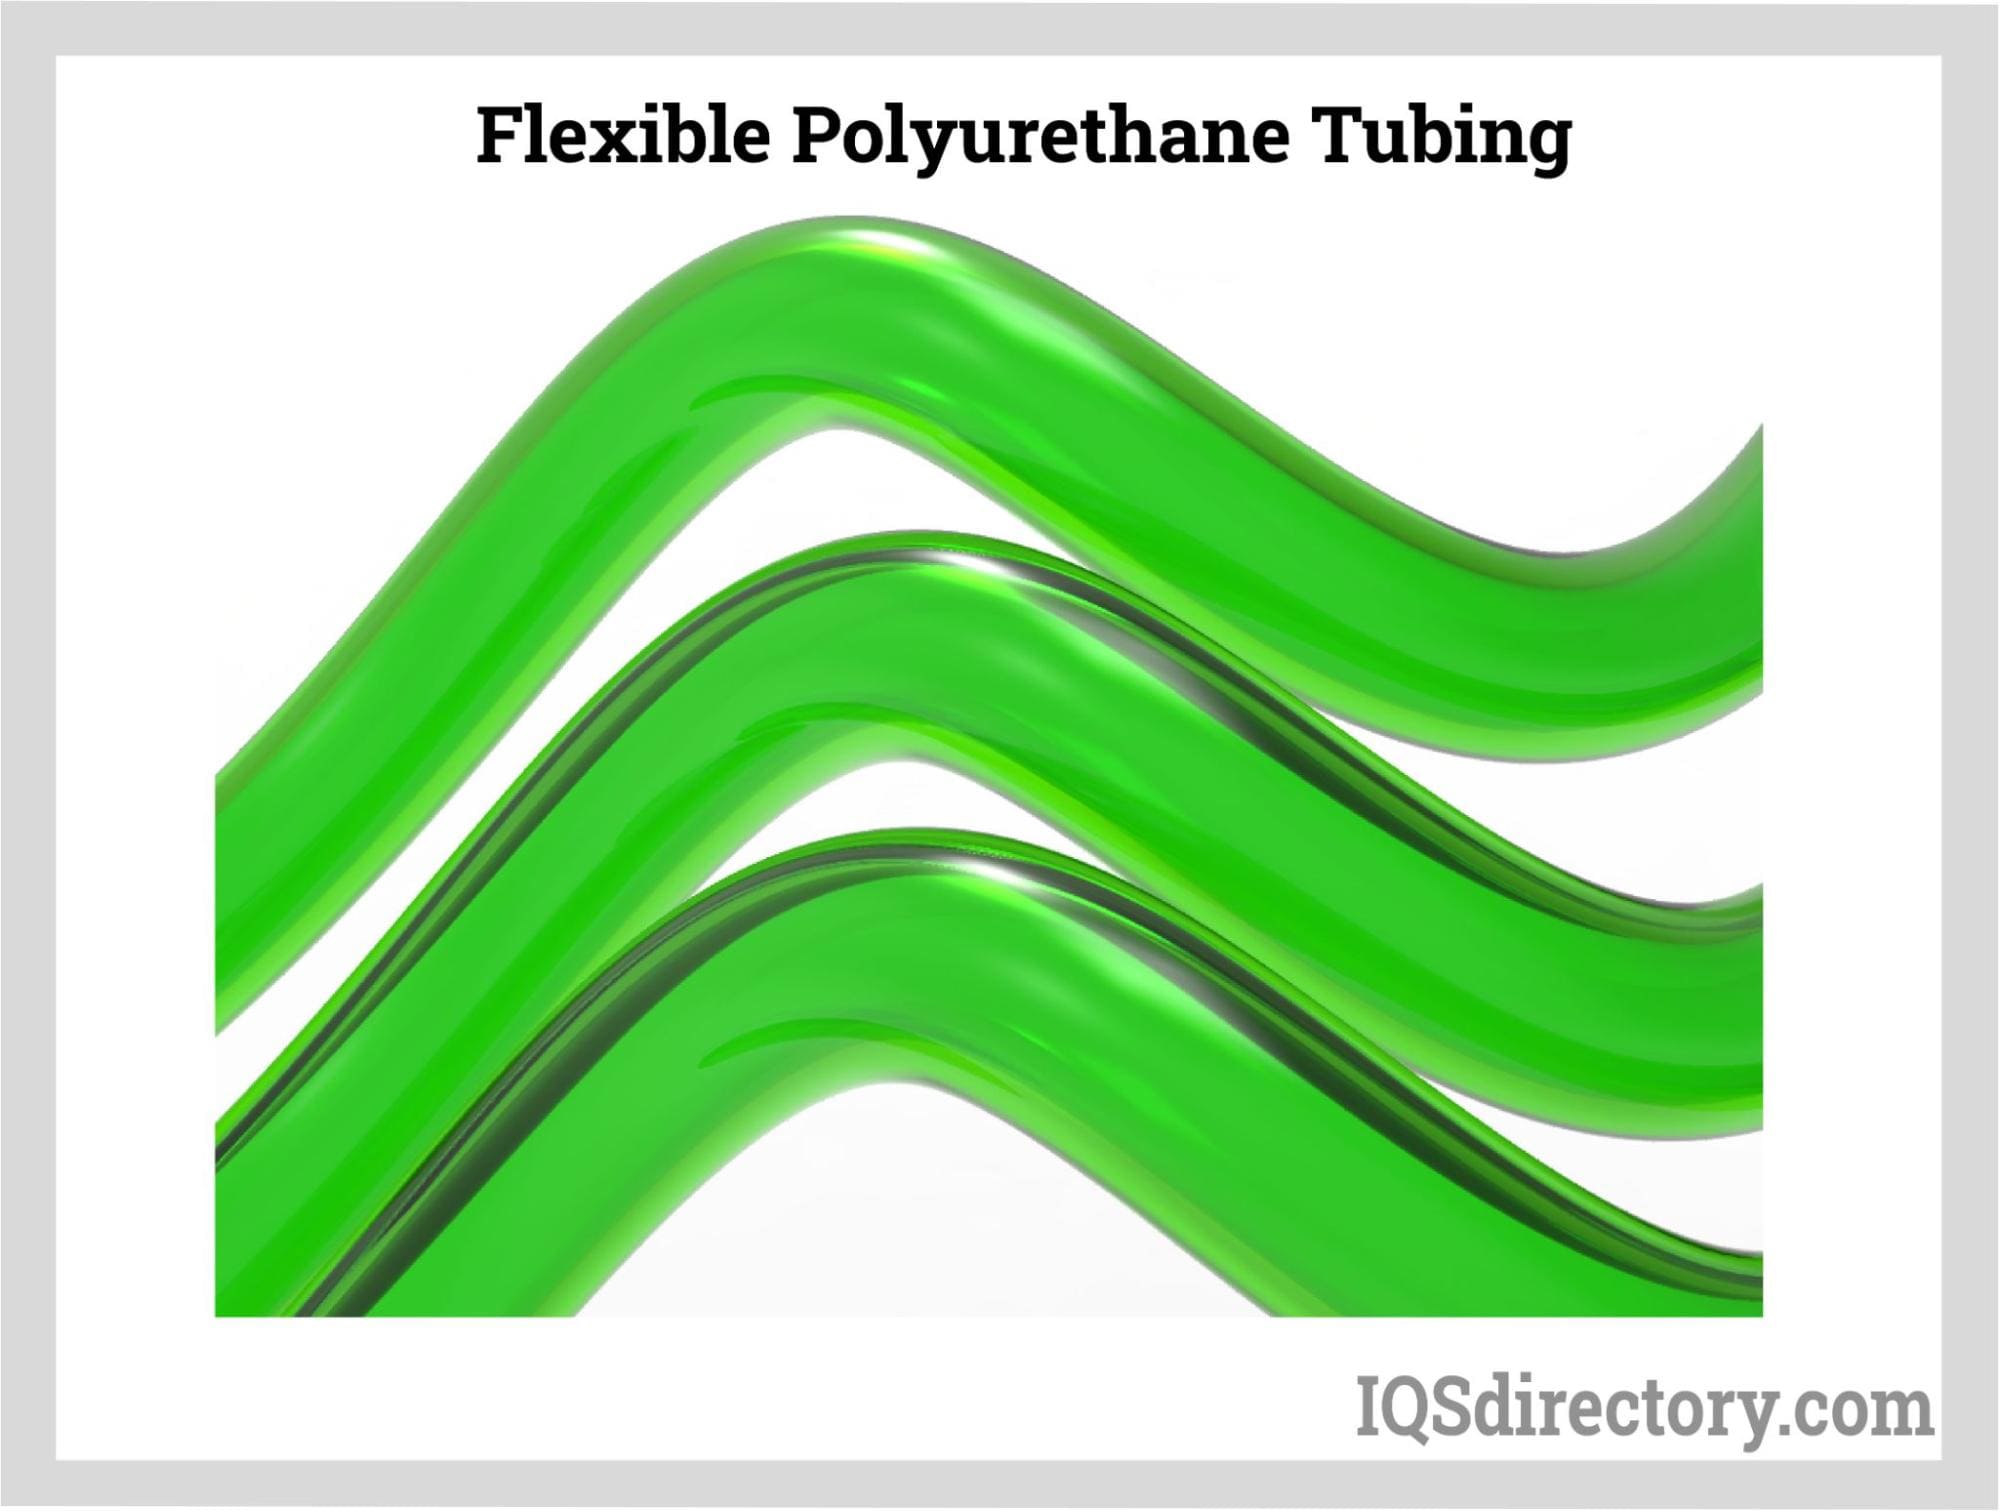 Flexible Polyurethane Tubing